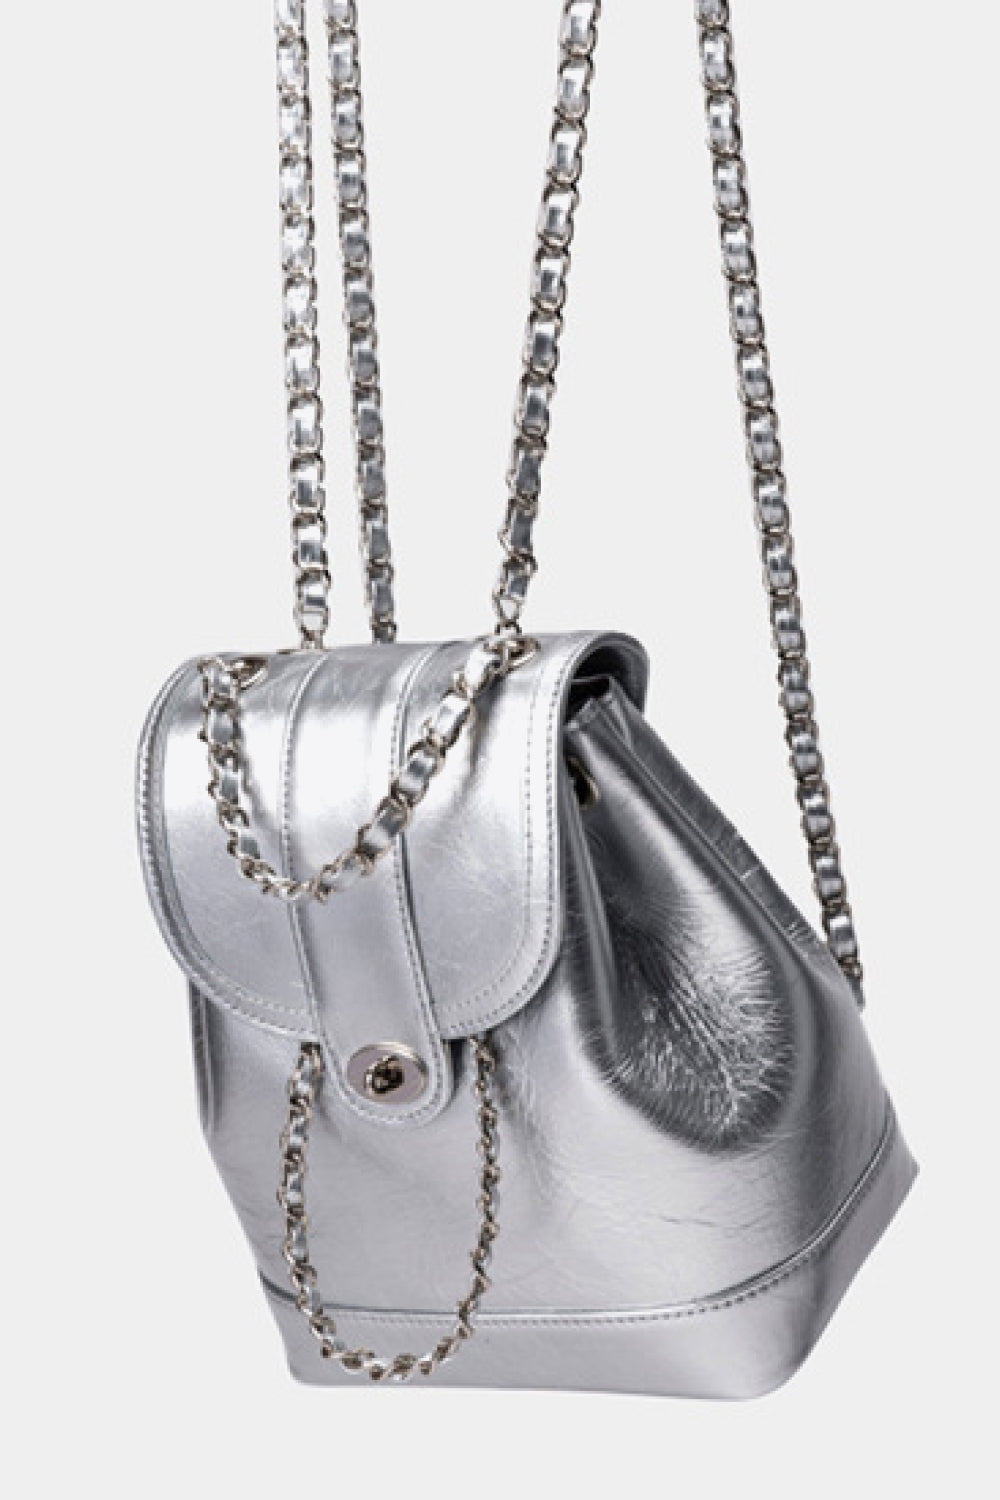 Lavender Chrome PU Leather Backpack Handbags